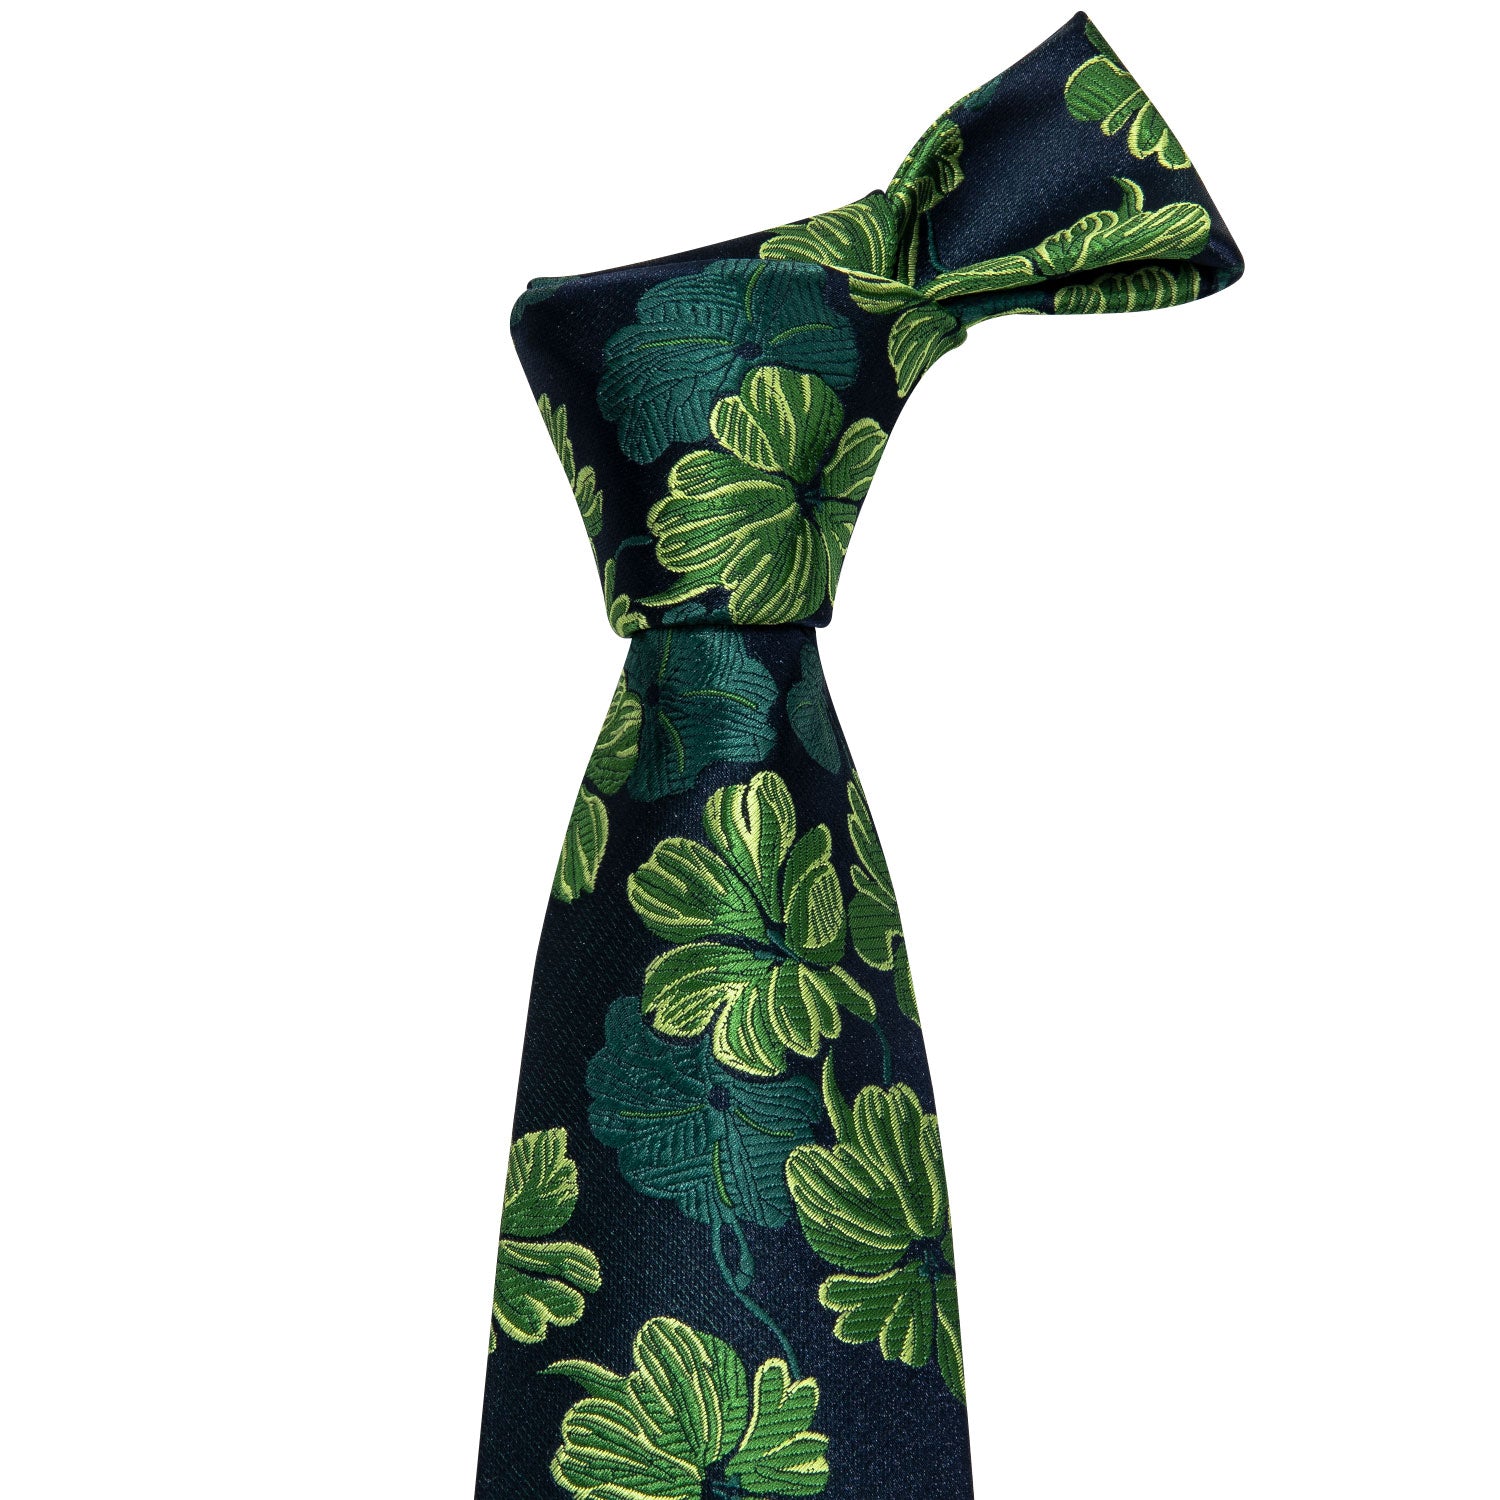 Barry.wang Green Tie Jacquard Floral Silk Tie Handkerchief Cufflinks Set for Men